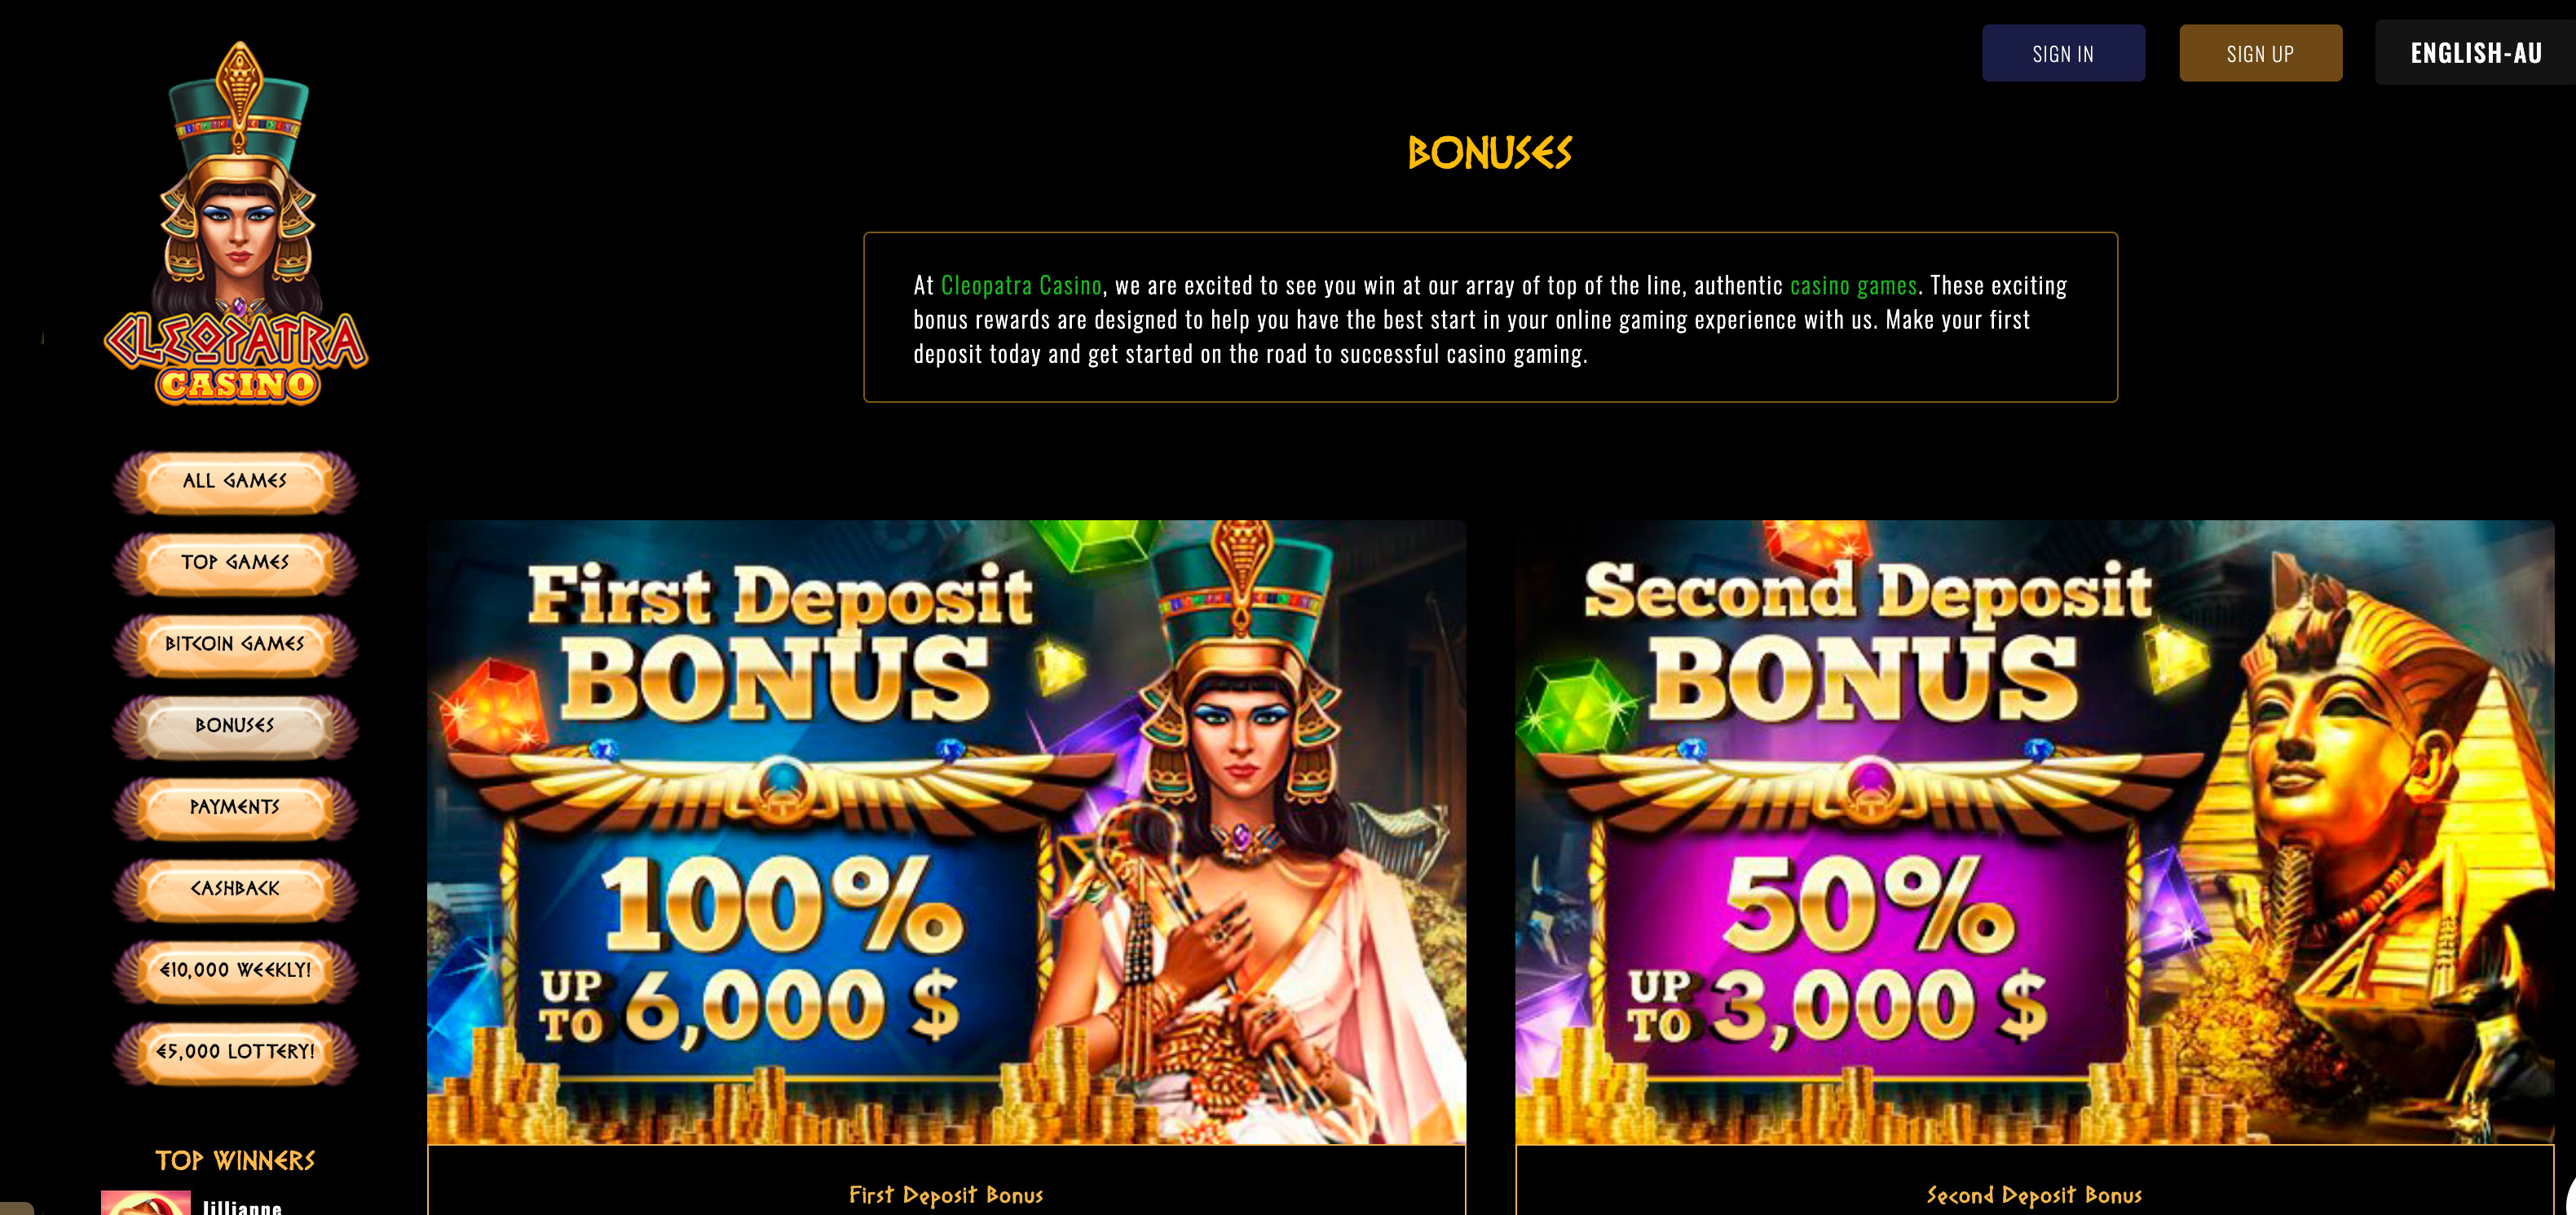 Cleopatra Casino bonuses for aussie players